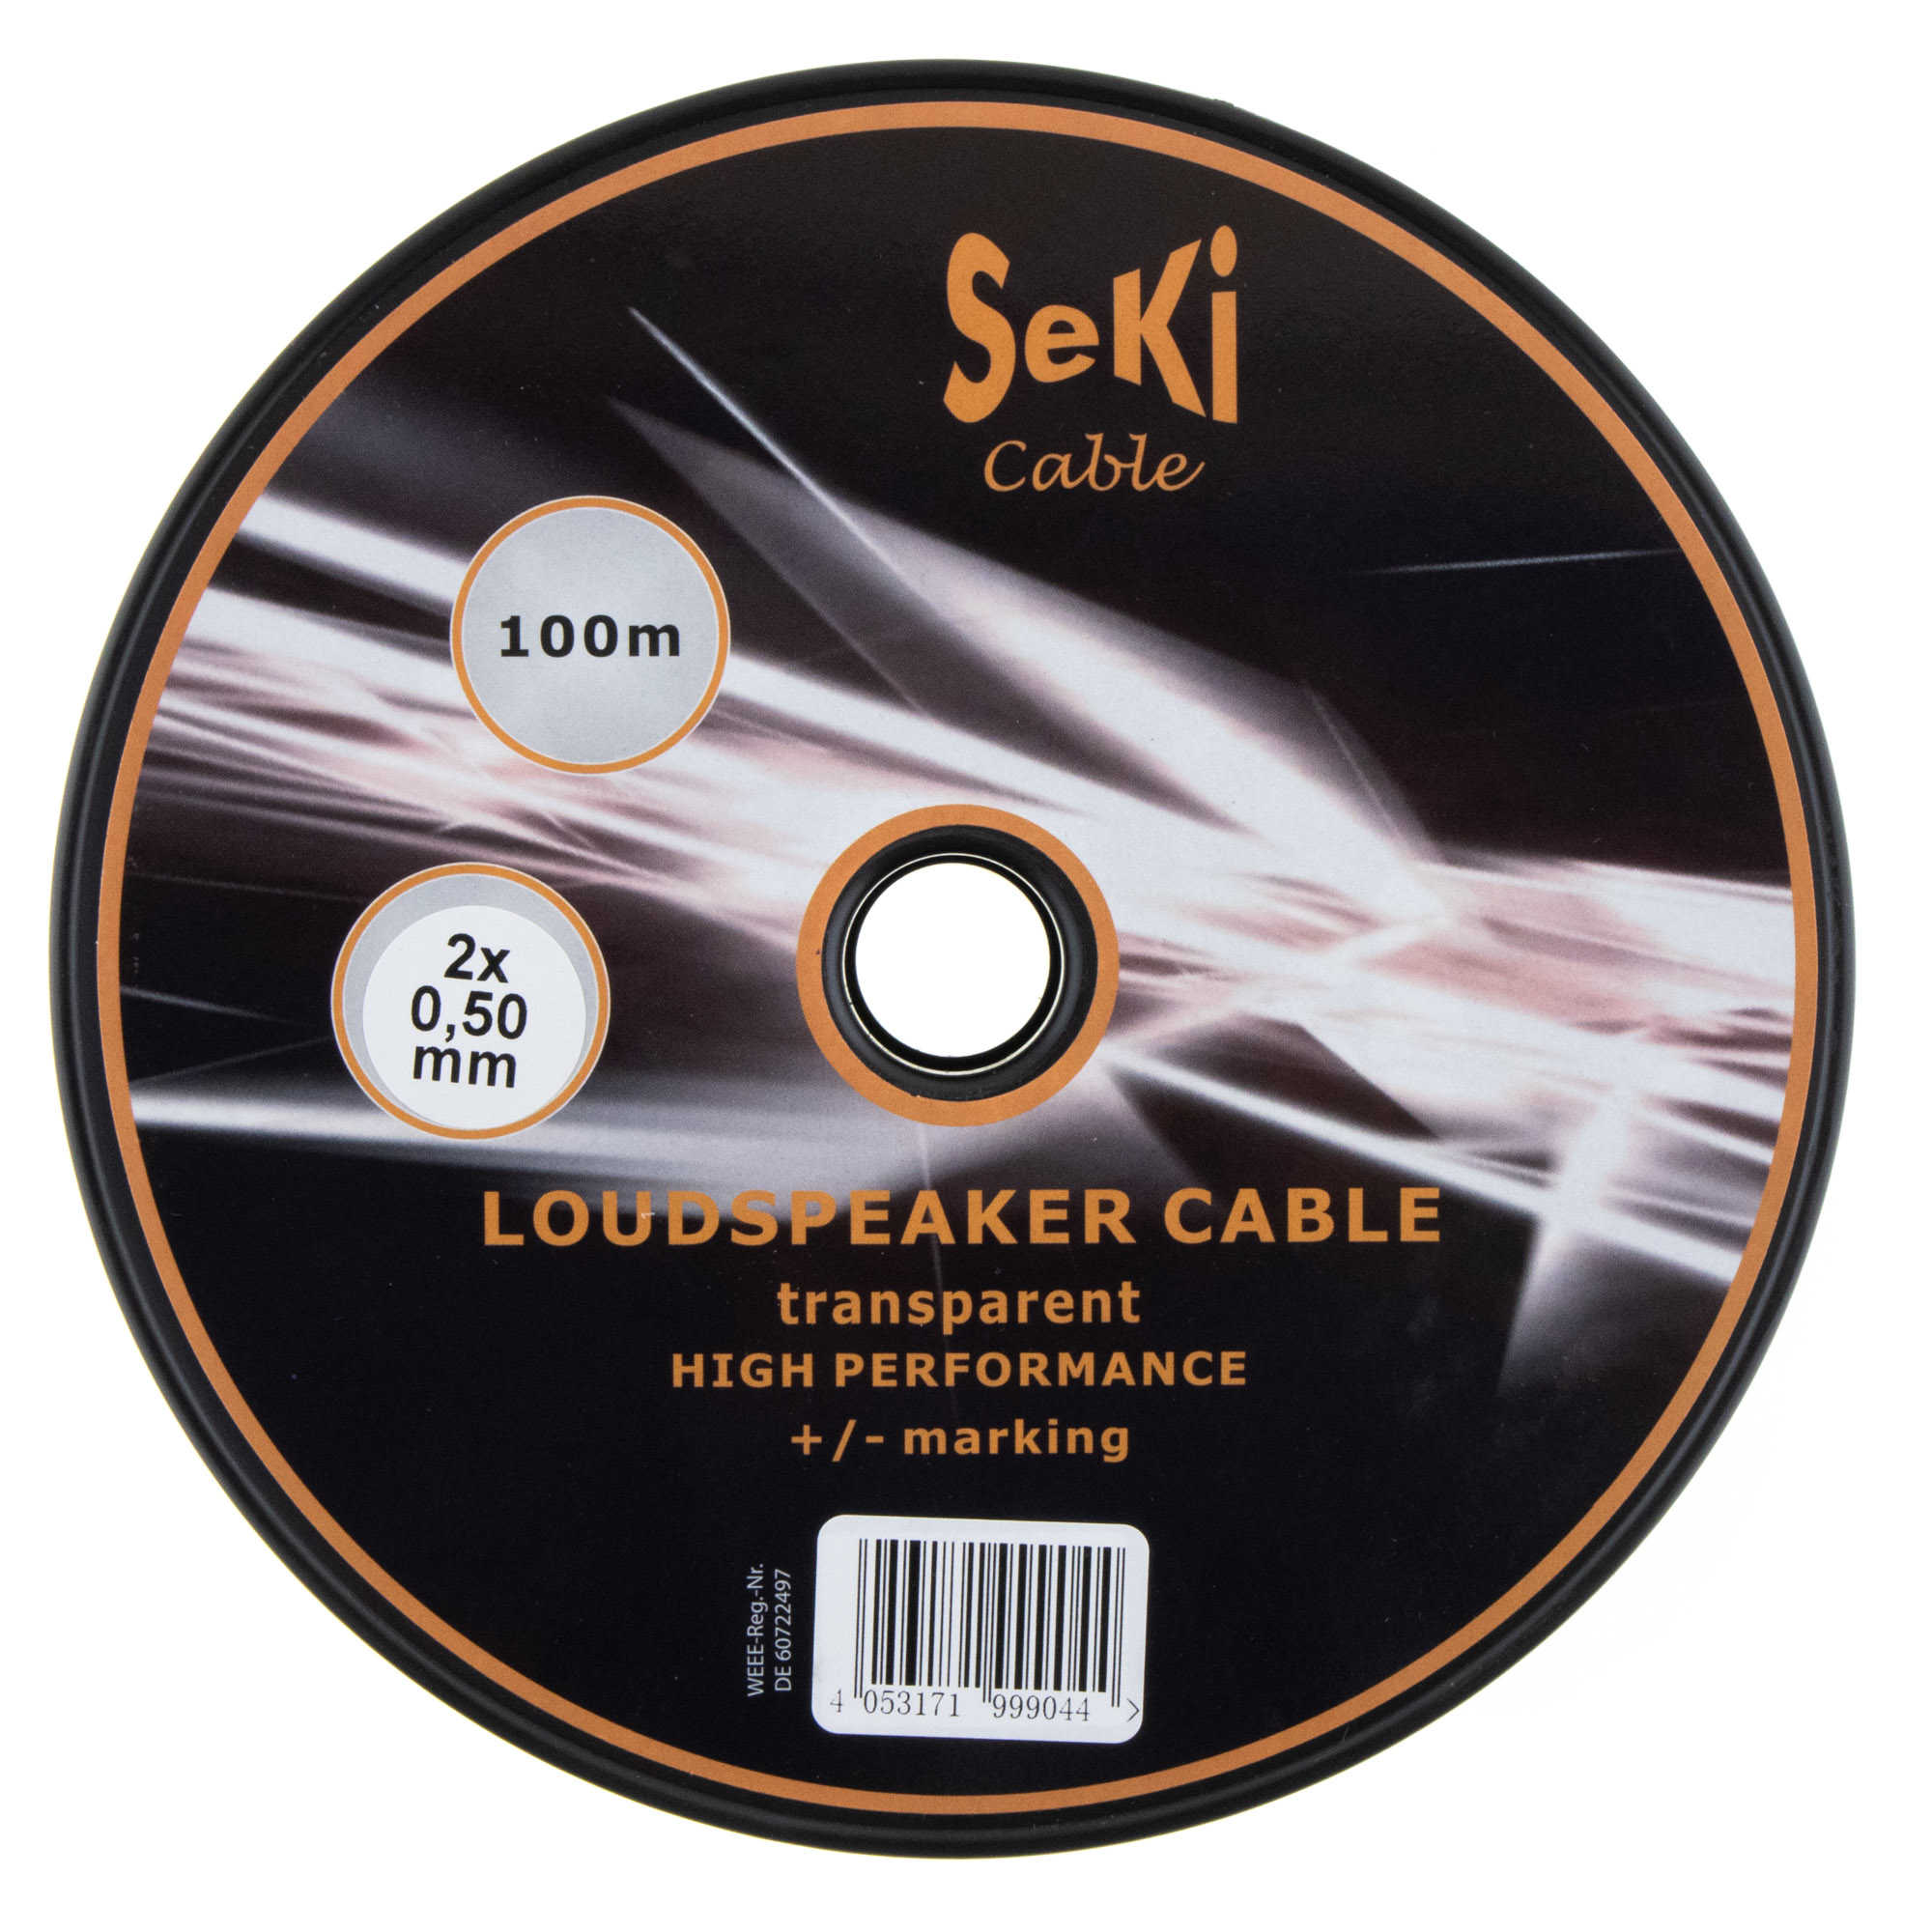 Loudspeaker cable transparent 100m 0.50mm